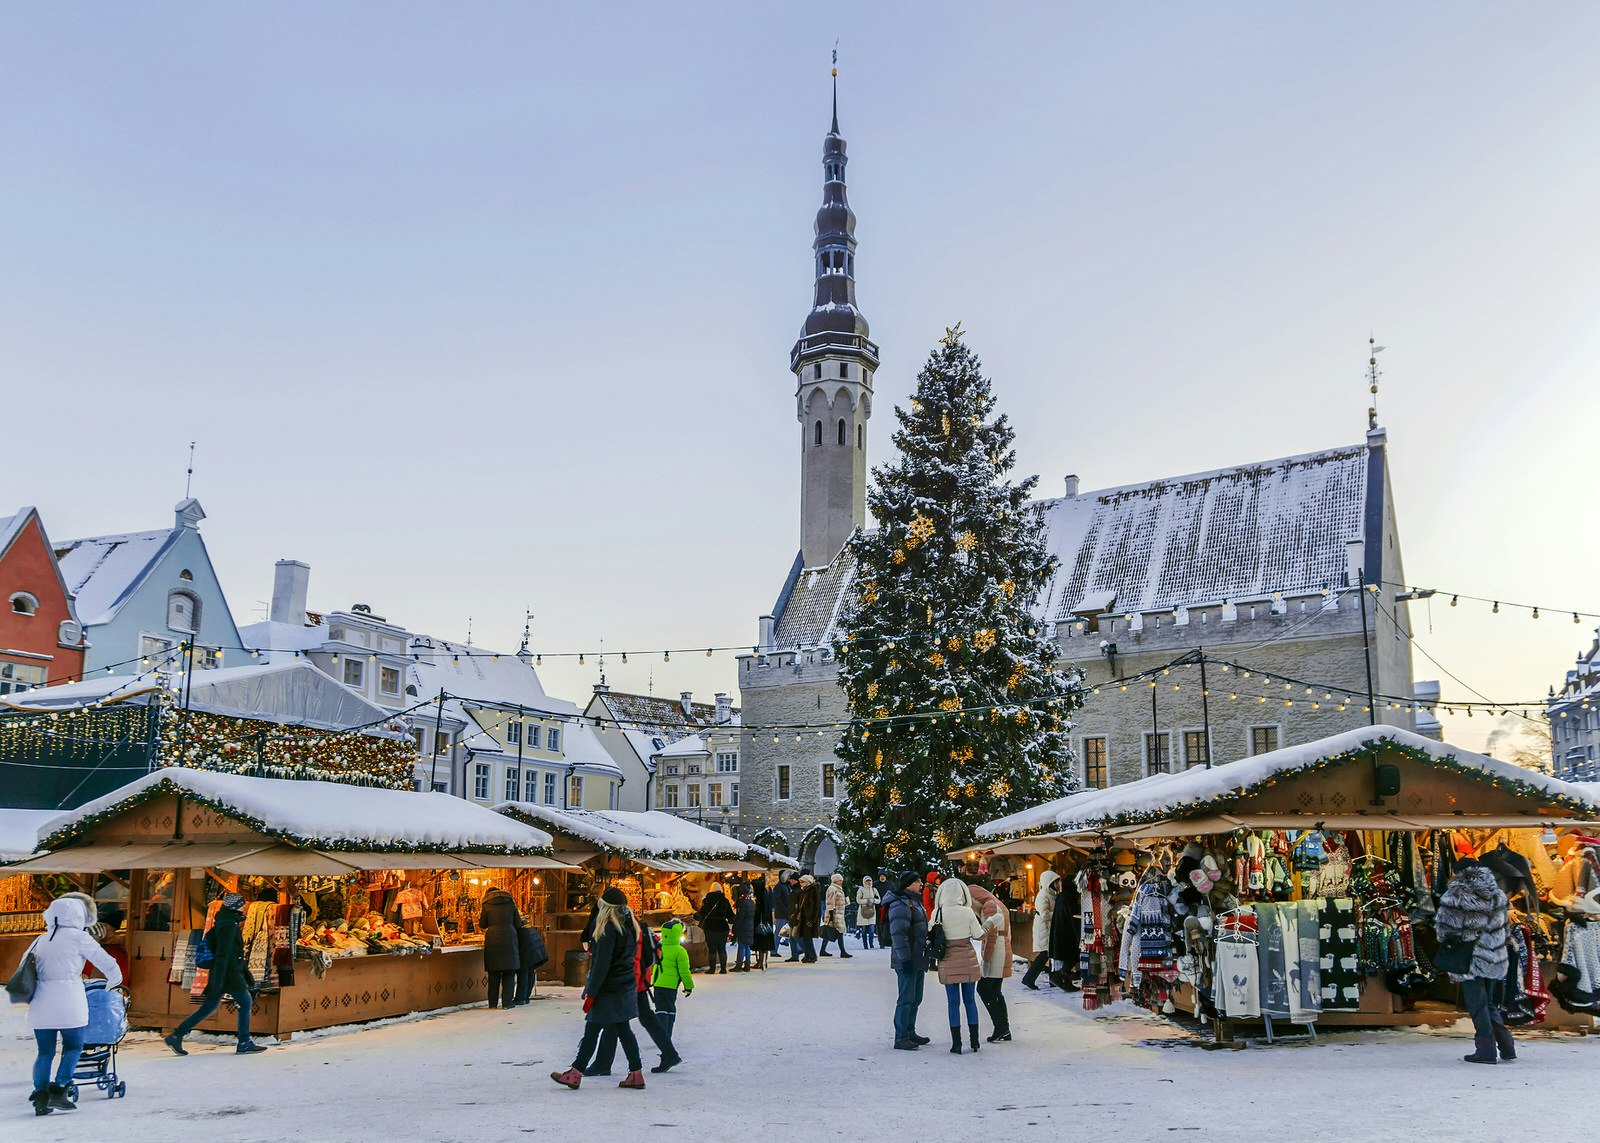 A snow covered Christmas market in Tallinn's Town Hall Sq